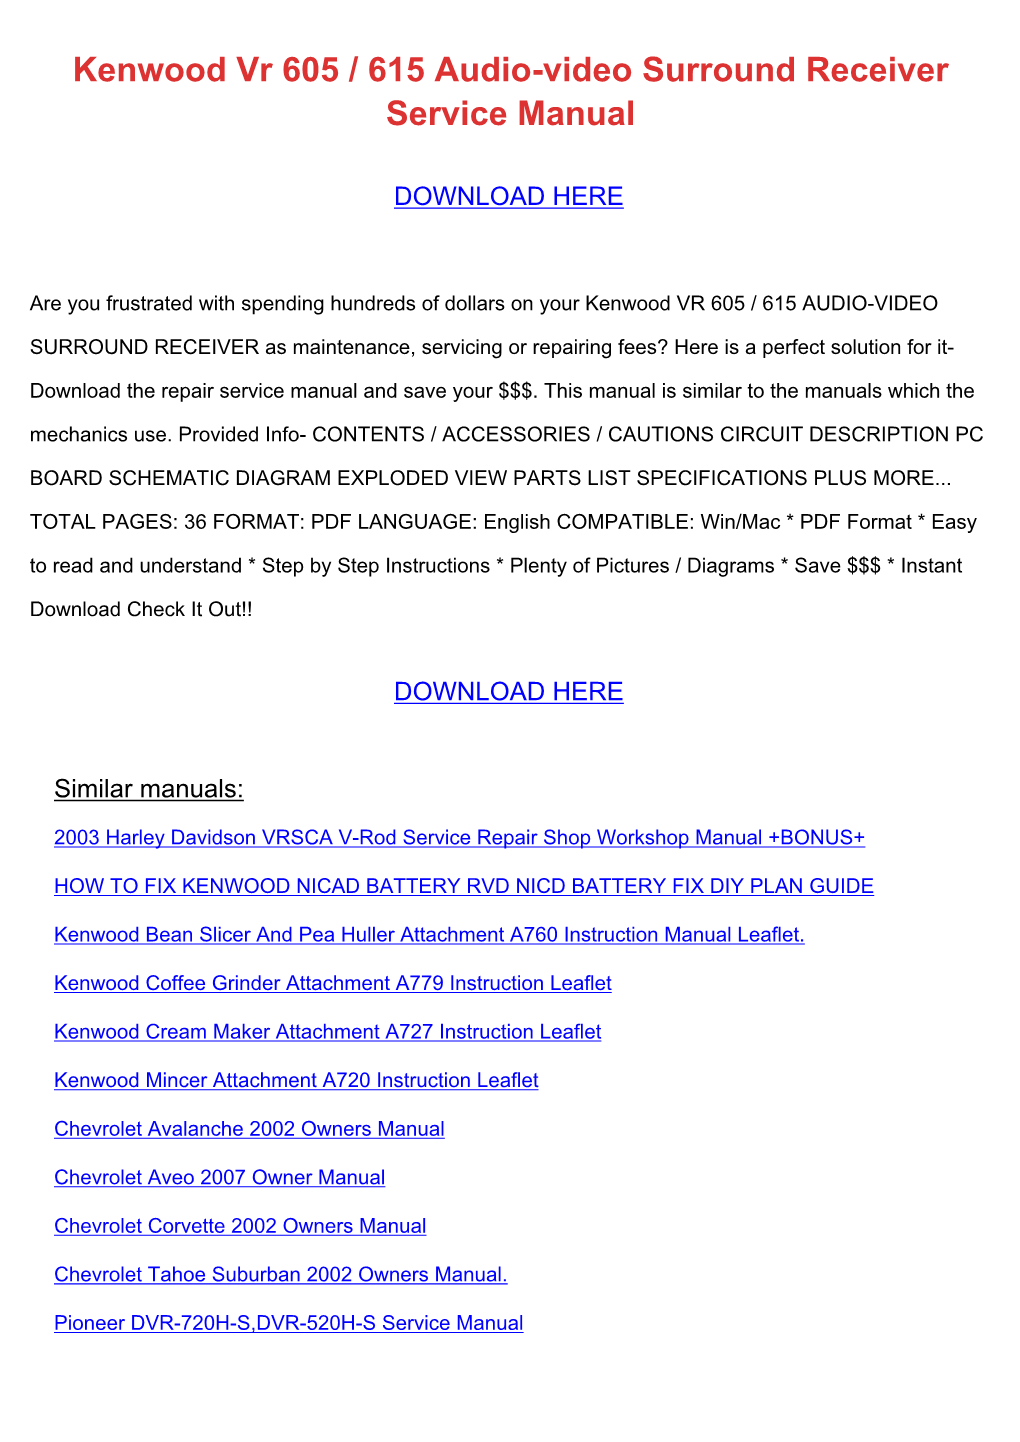 Kenwood Vr 605 / 615 Audio-Video Surround Receiver Service Manual